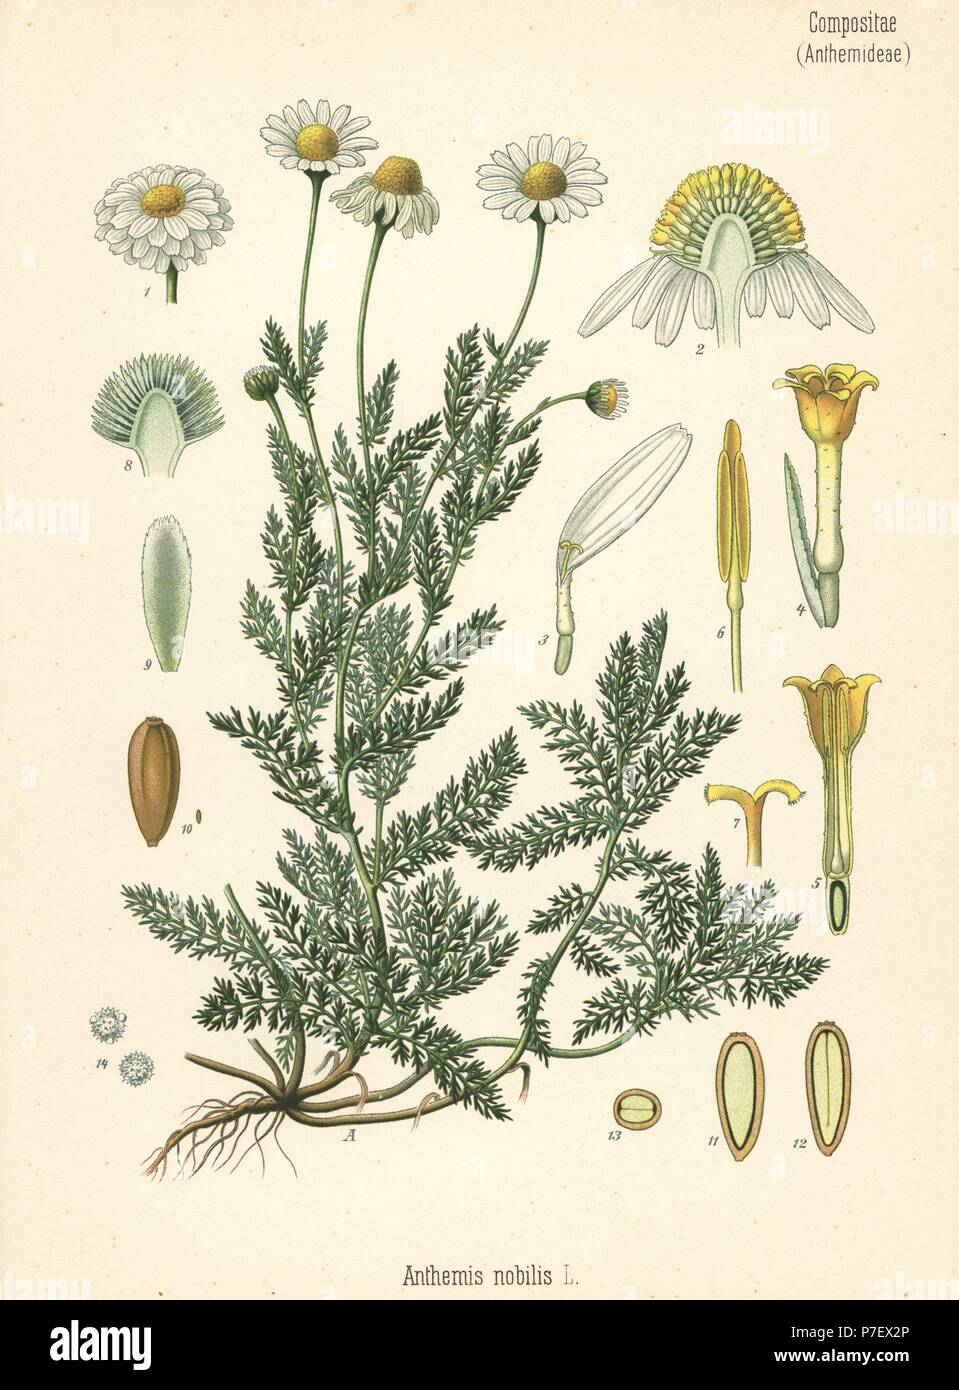 Chamomile, Chamaemelum nobile (Anthemis nobilis). Chromolithograph after a botanical illustration from Hermann Adolph Koehler's Medicinal Plants, edited by Gustav Pabst, Koehler, Germany, 1887. Stock Photo